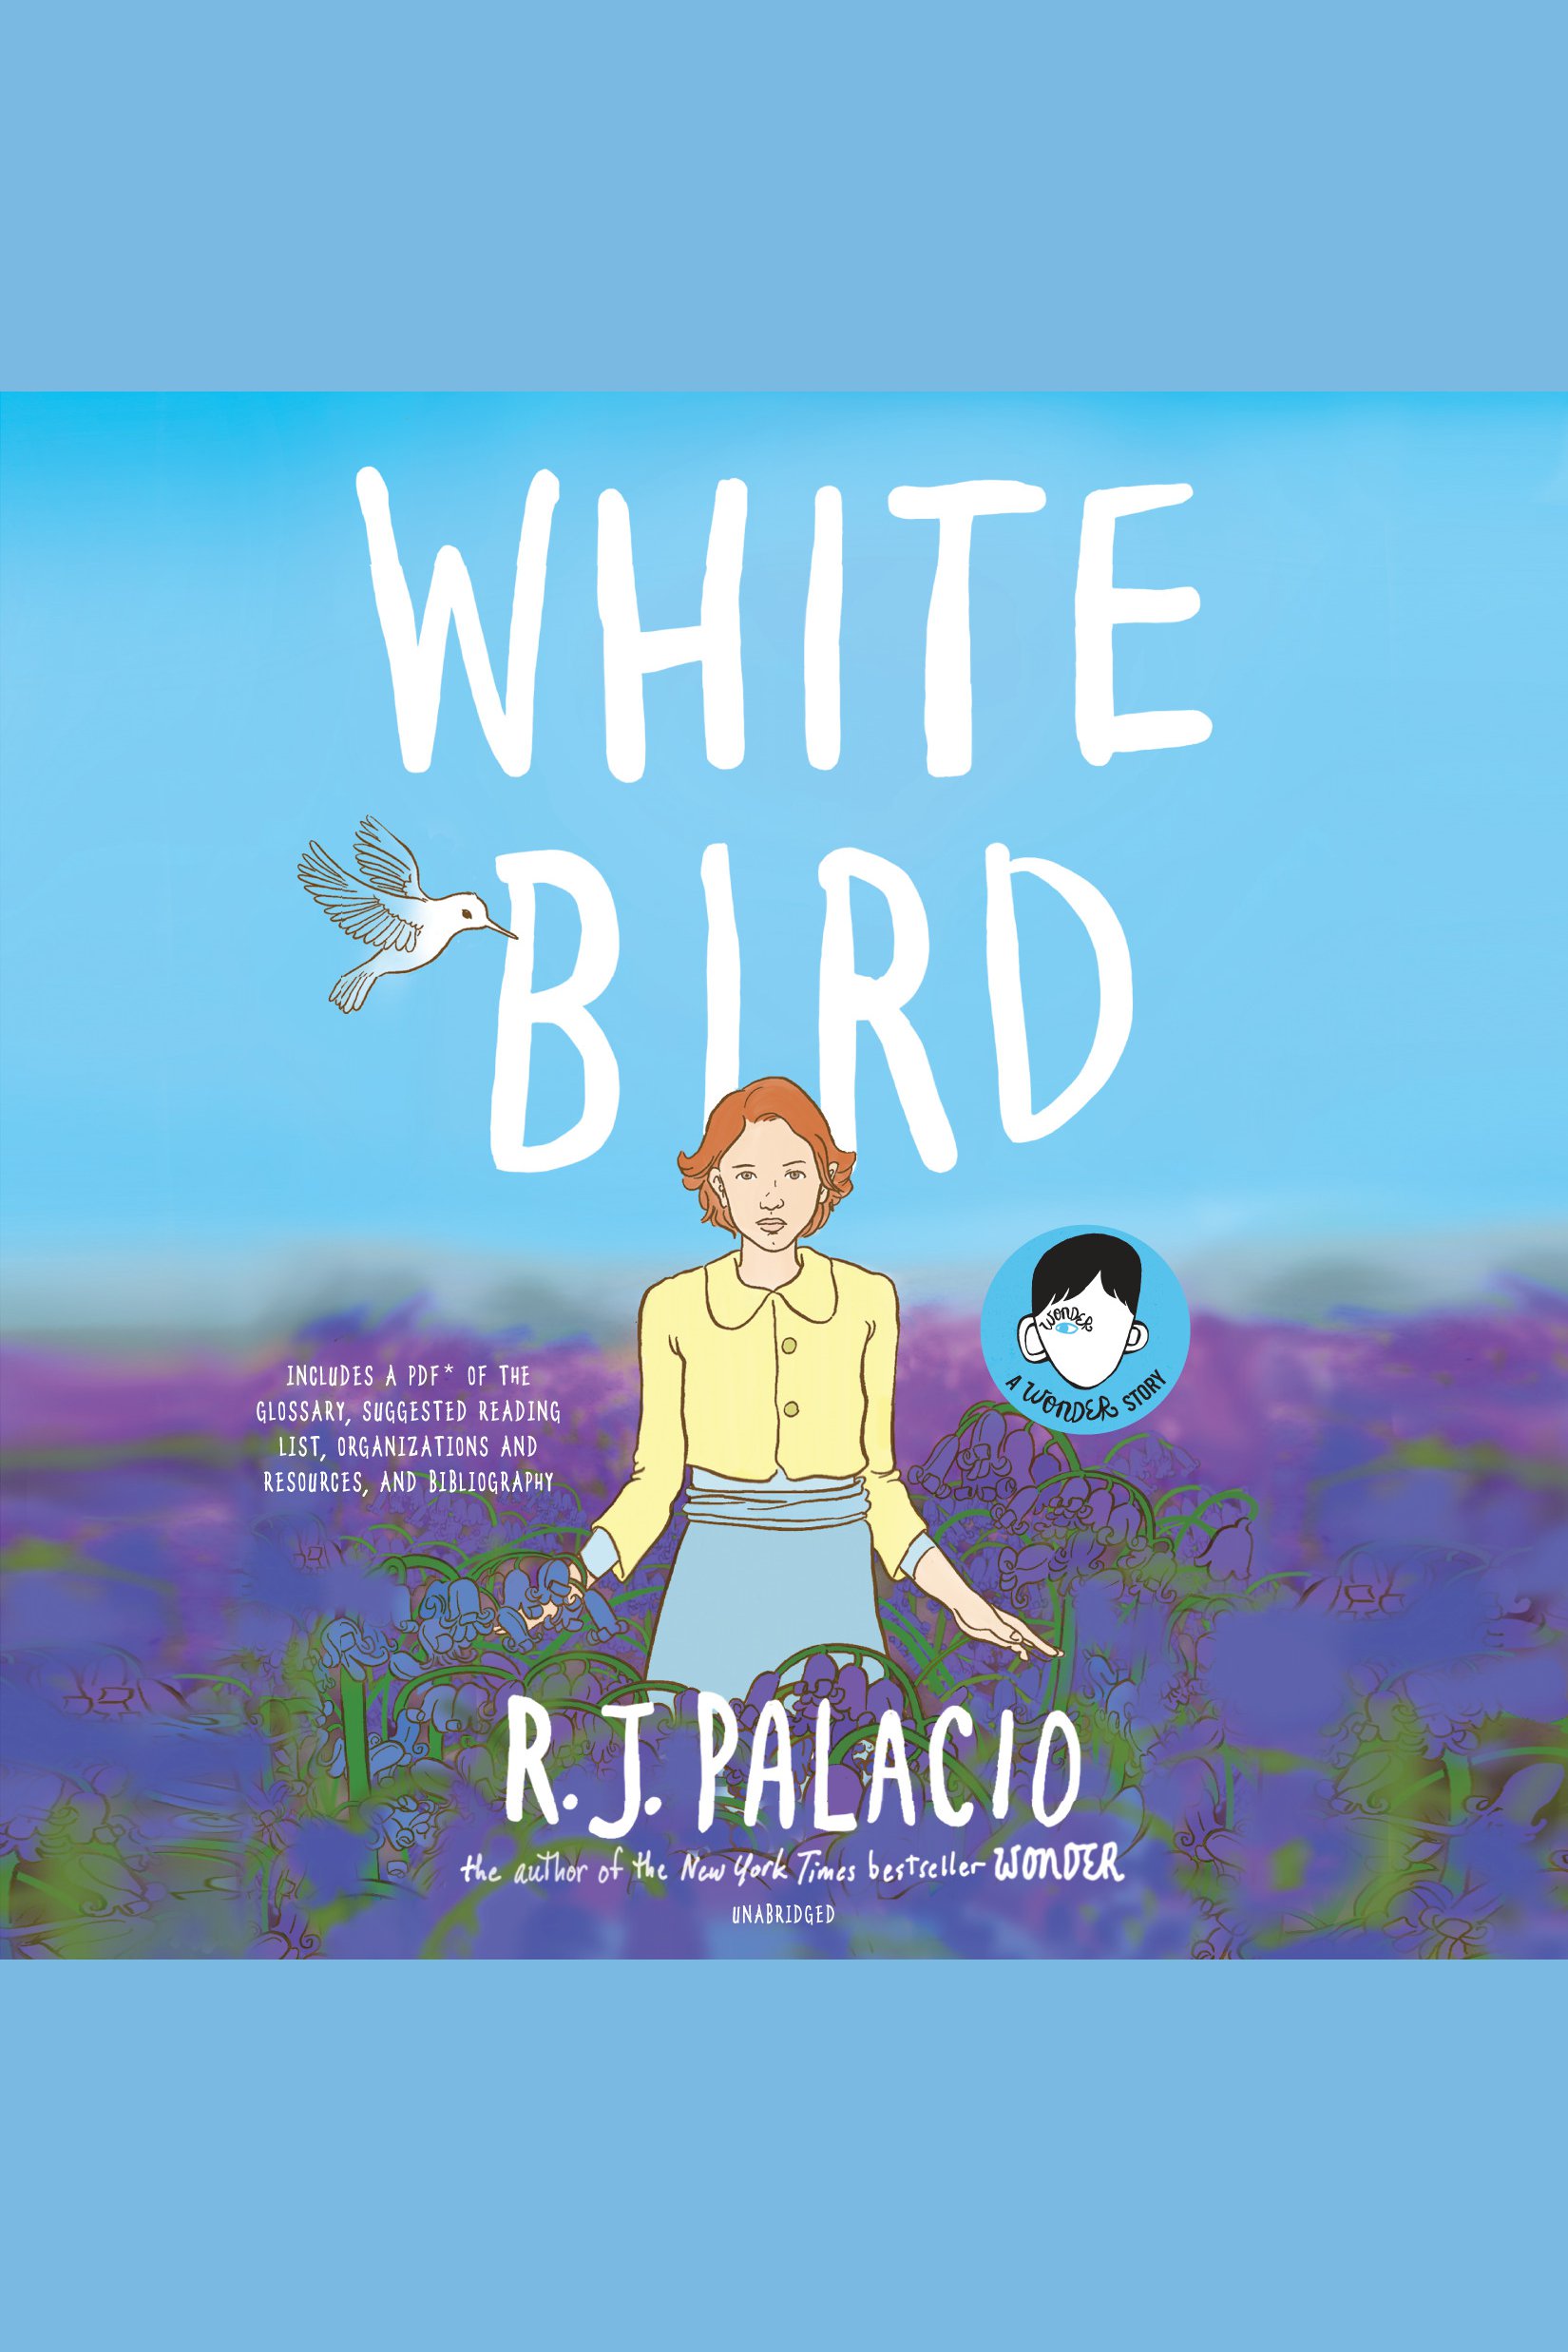 White bird cover image